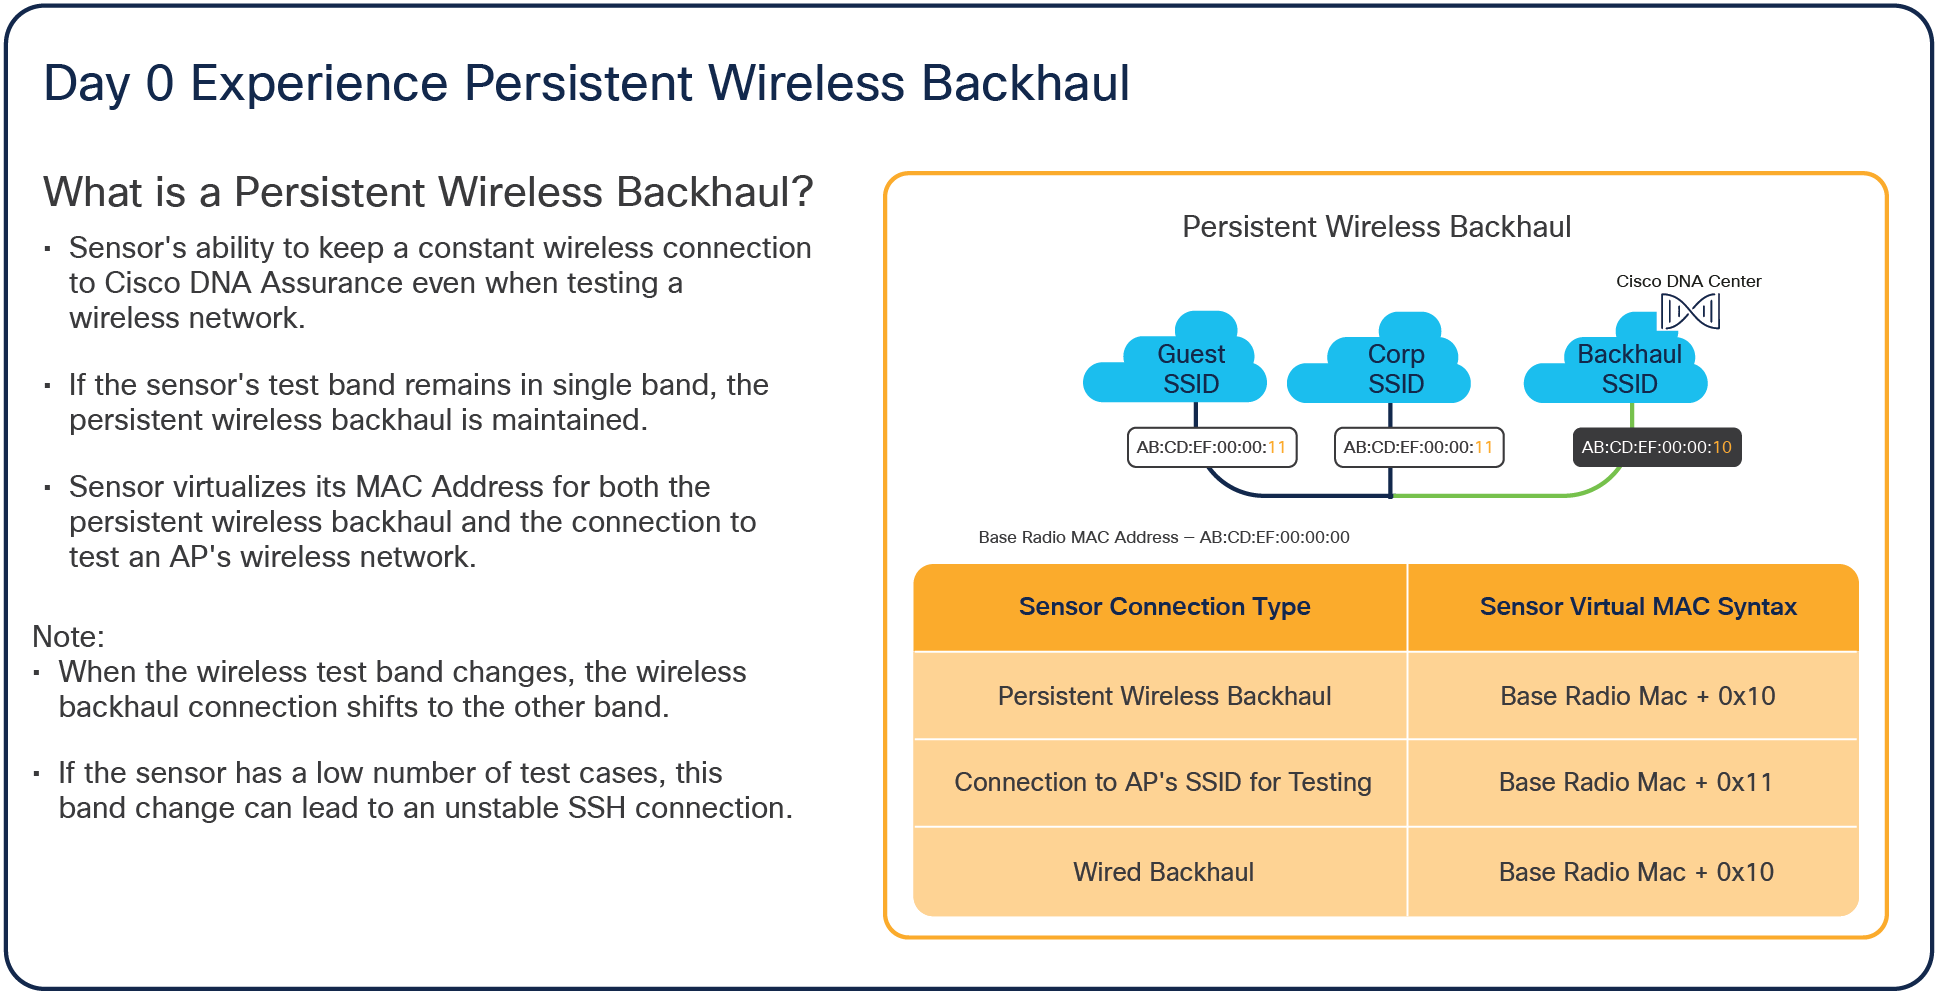 Advantages of persistent wireless backhaul